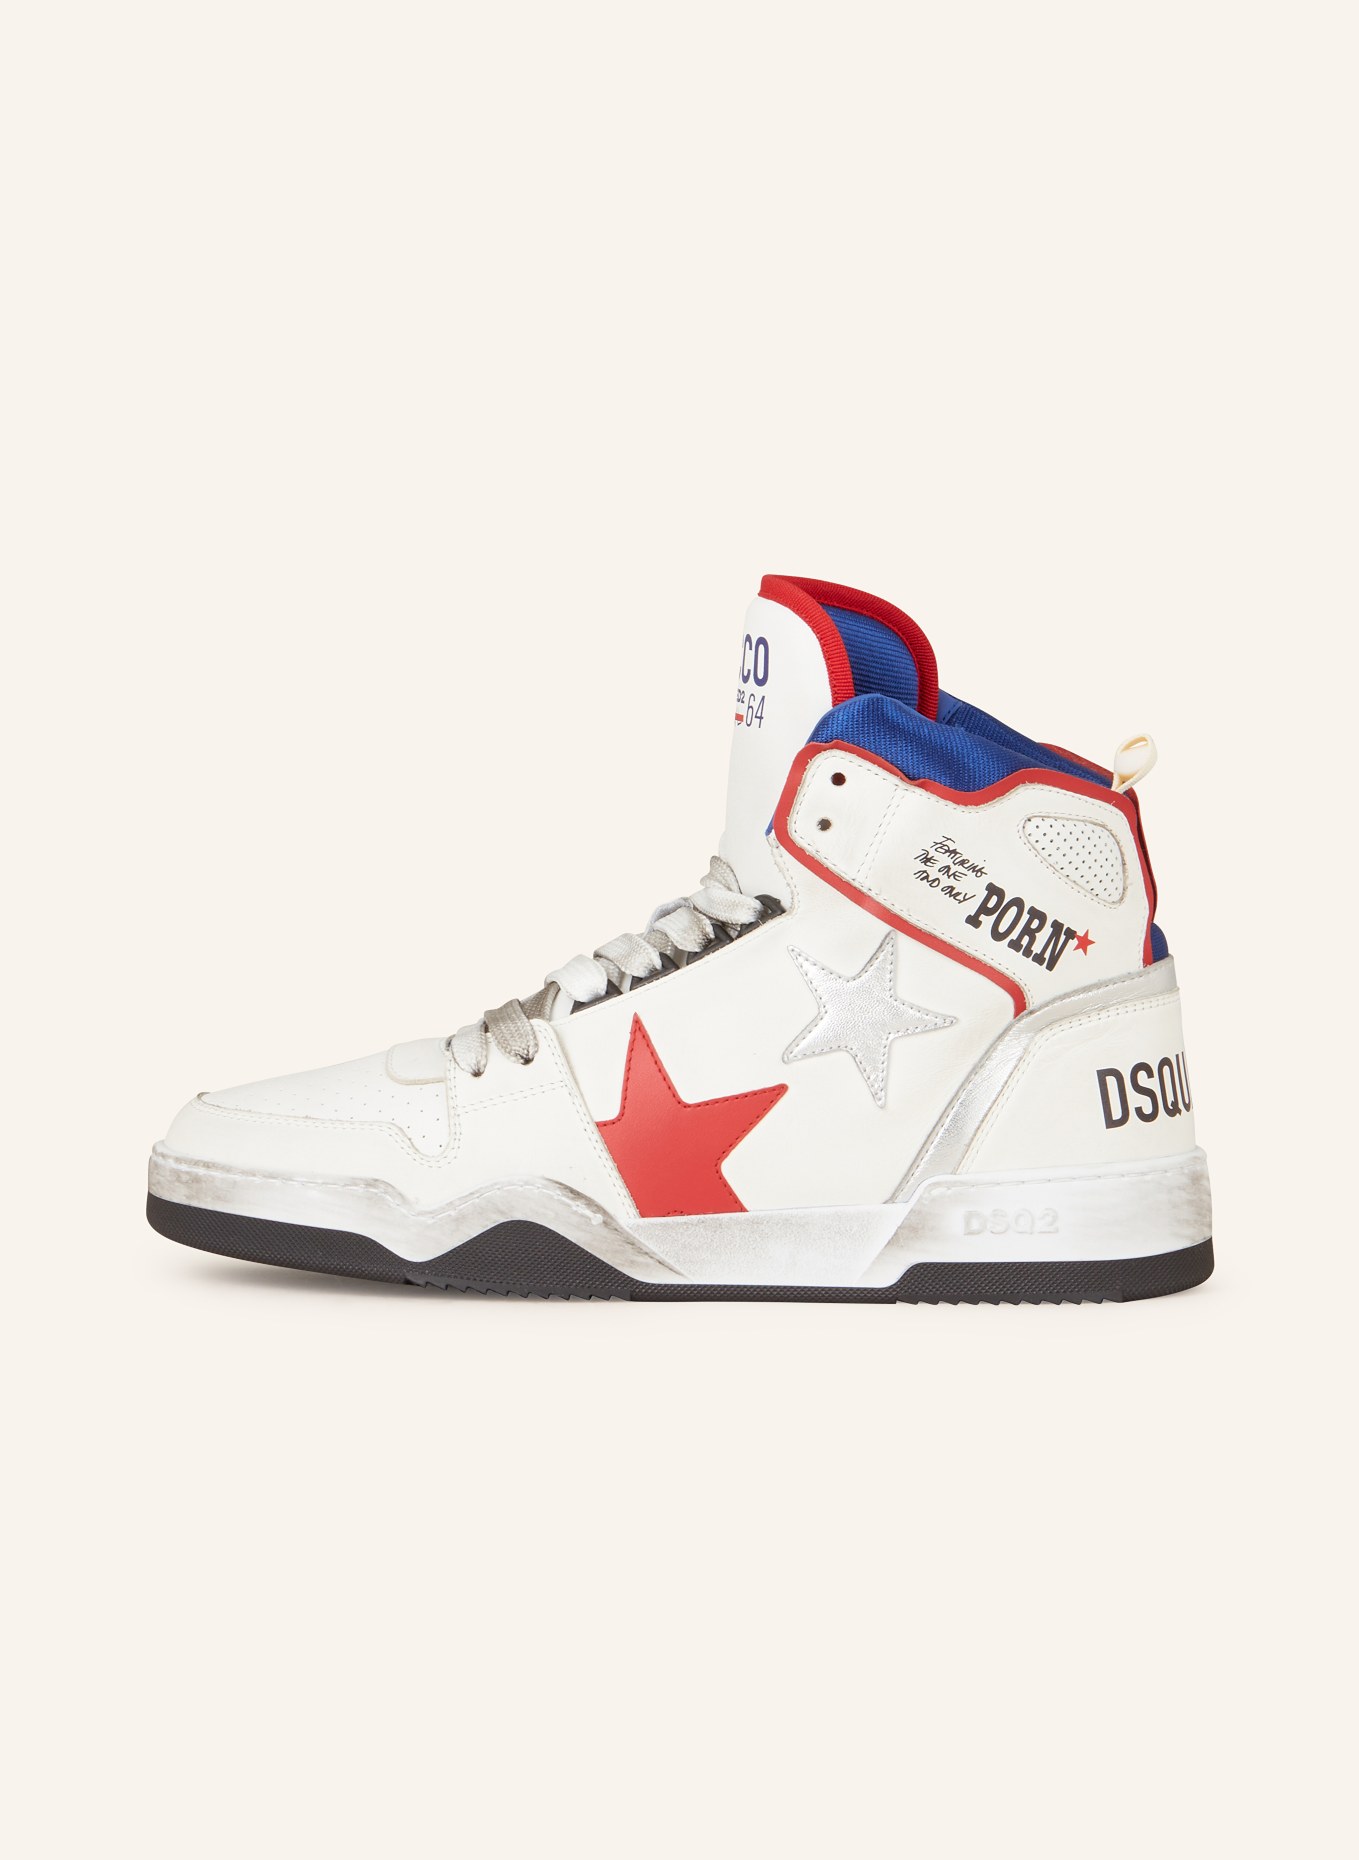 DSQUARED2 Hightop-Sneaker SPIKER, Farbe: WEISS/ ROT/ BLAU (Bild 4)